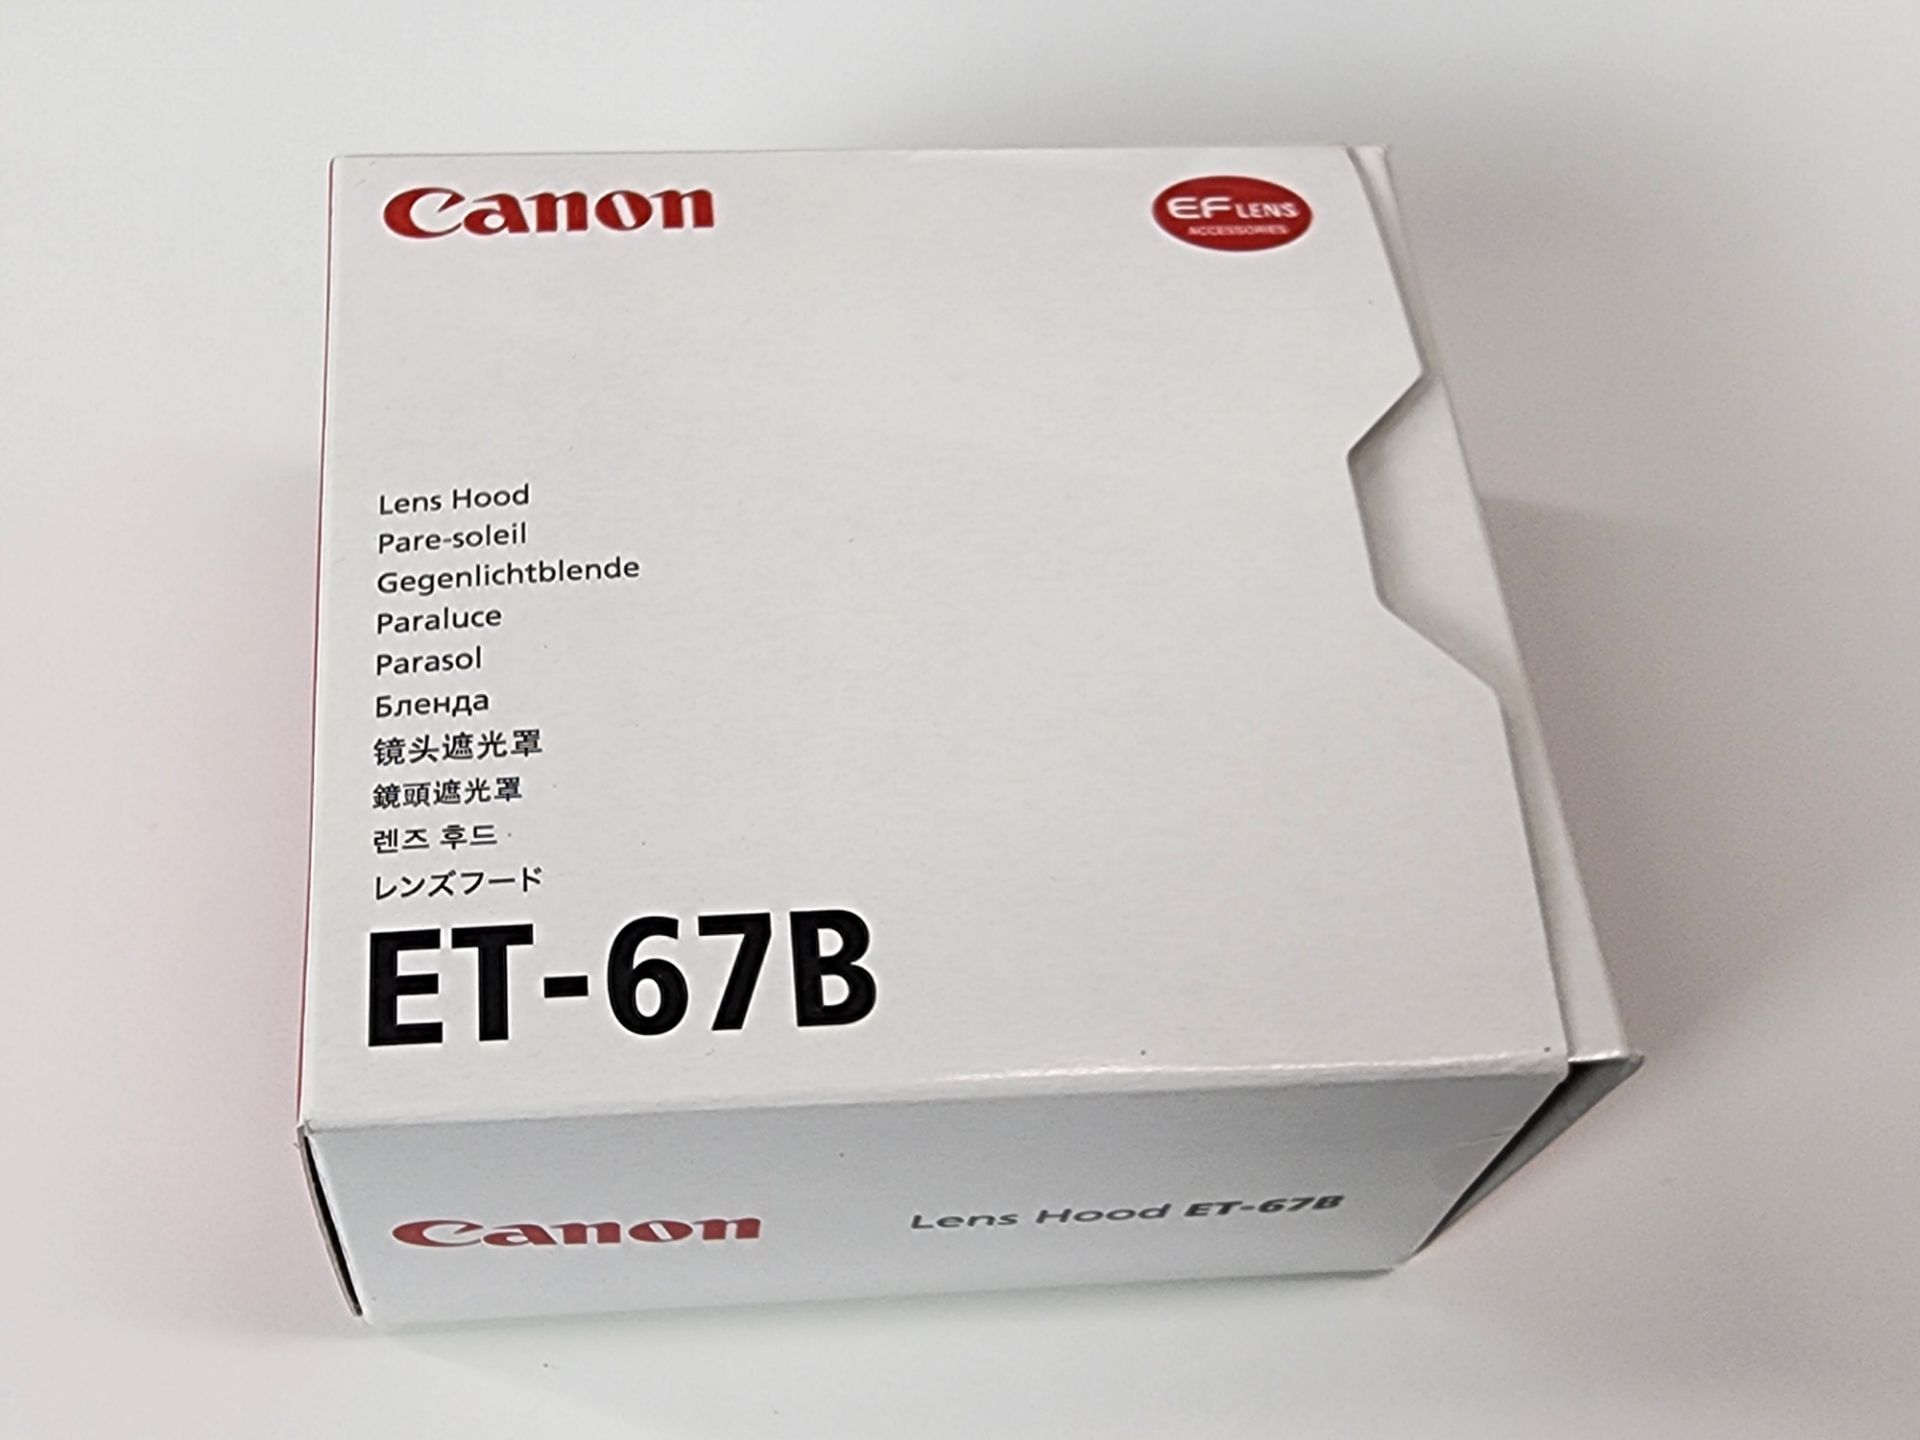 Canon Model EOS 80D (W) DSLR Camera Body, 24.2 Mega Pixel, Dual Pixel CMOS AF, Cross-Type Zmac 45- - Image 10 of 14